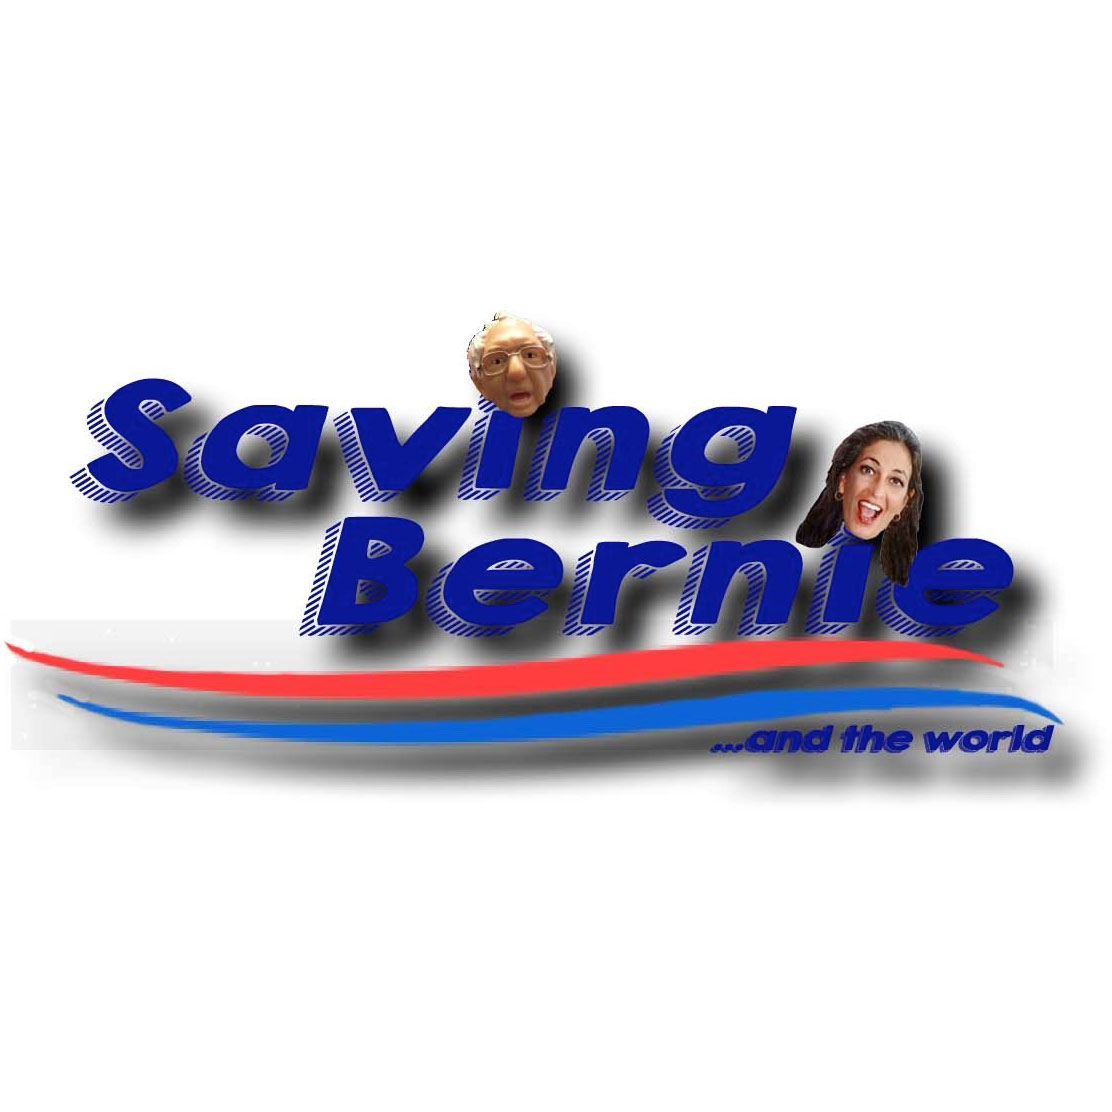 Saving Bernie